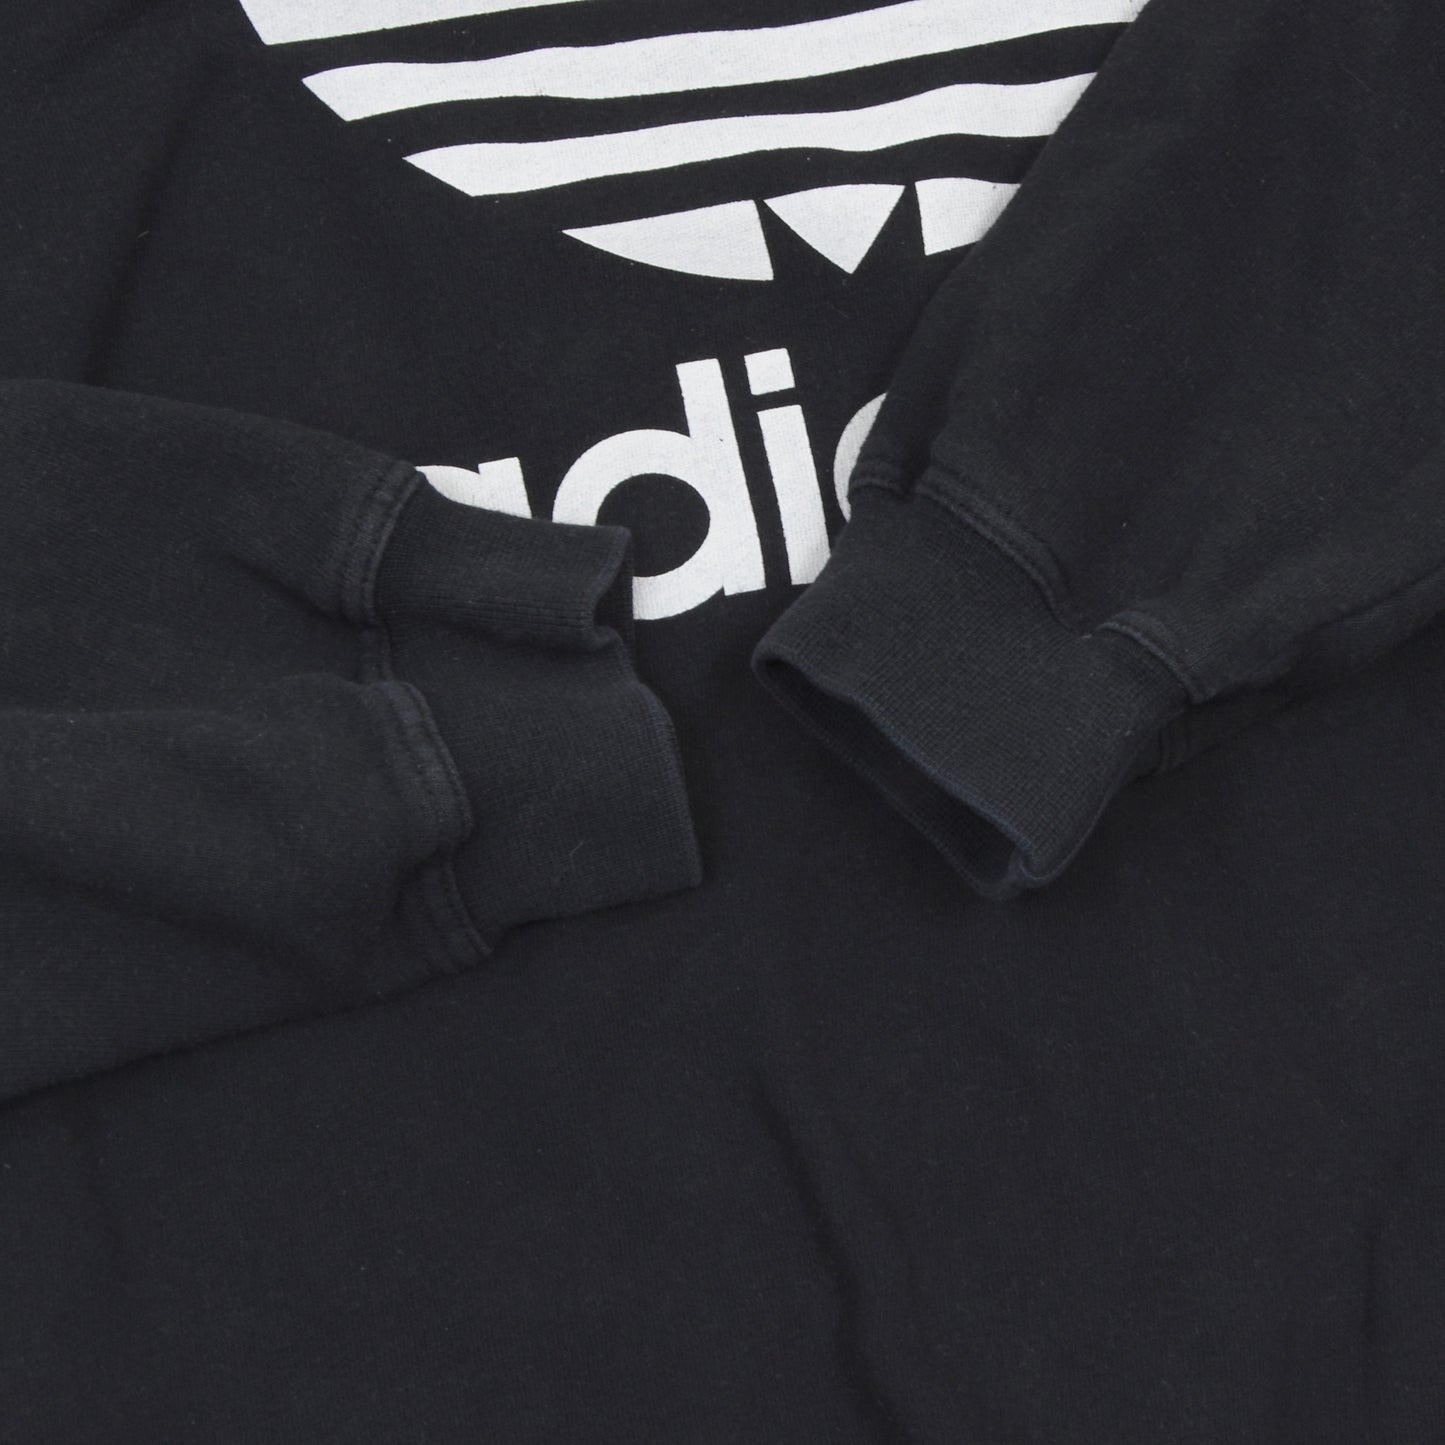 Vintage 1990s Adidas Trefoil Sweatshirt Size D7 - Black